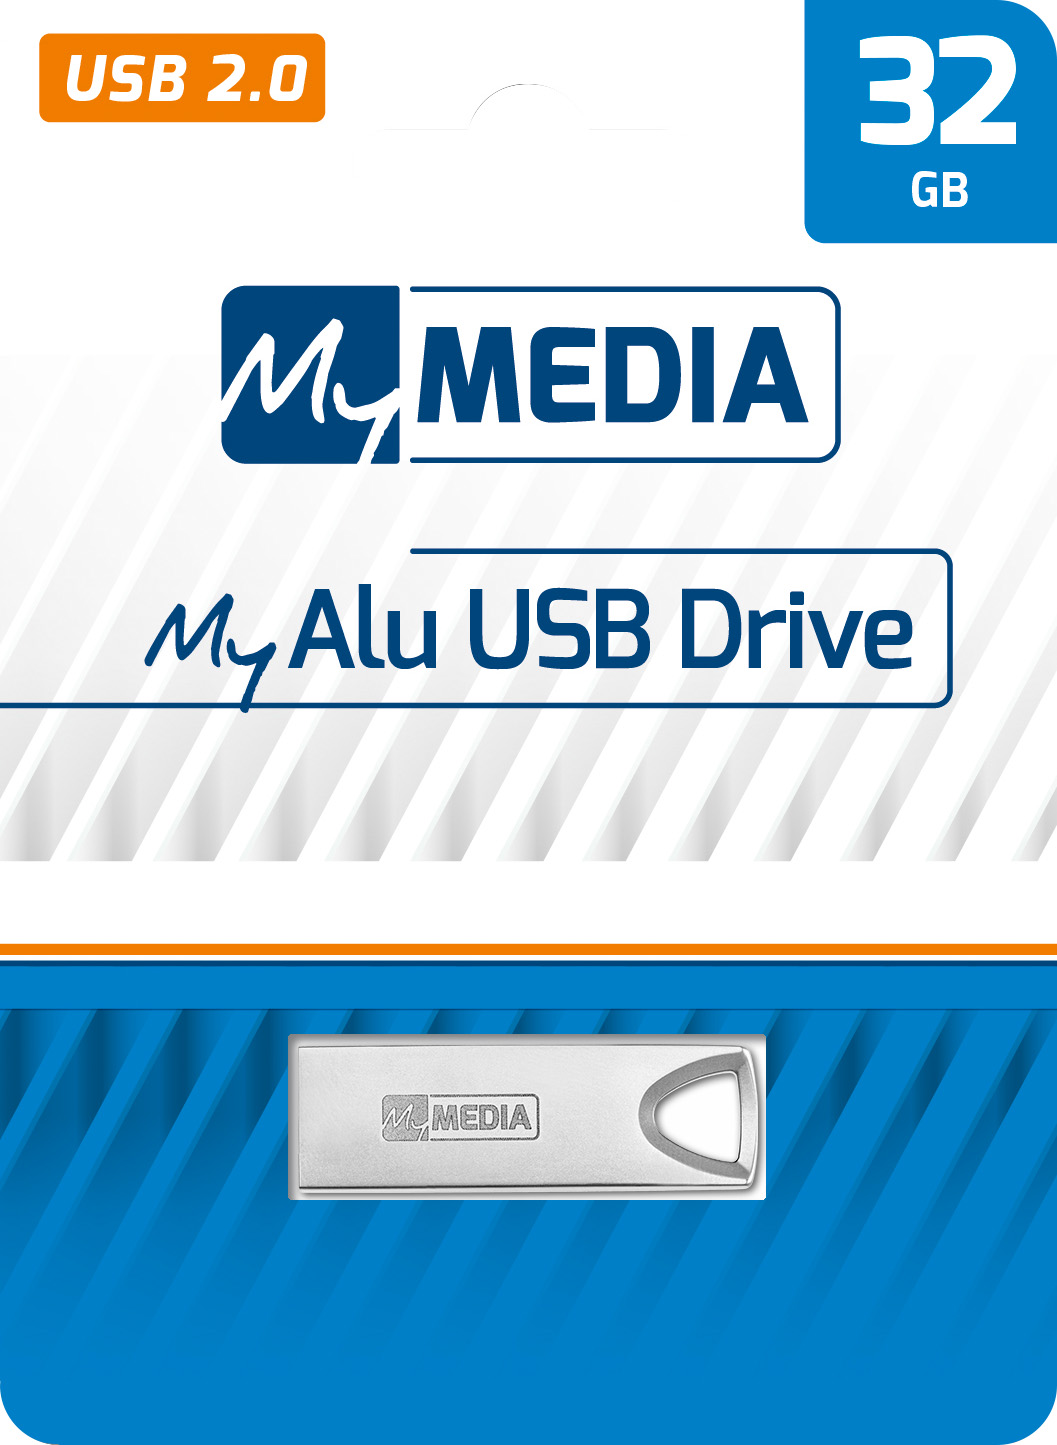 Mymedia USB 2.0 Stick 32GB, My Alu, silber Retail-Blister